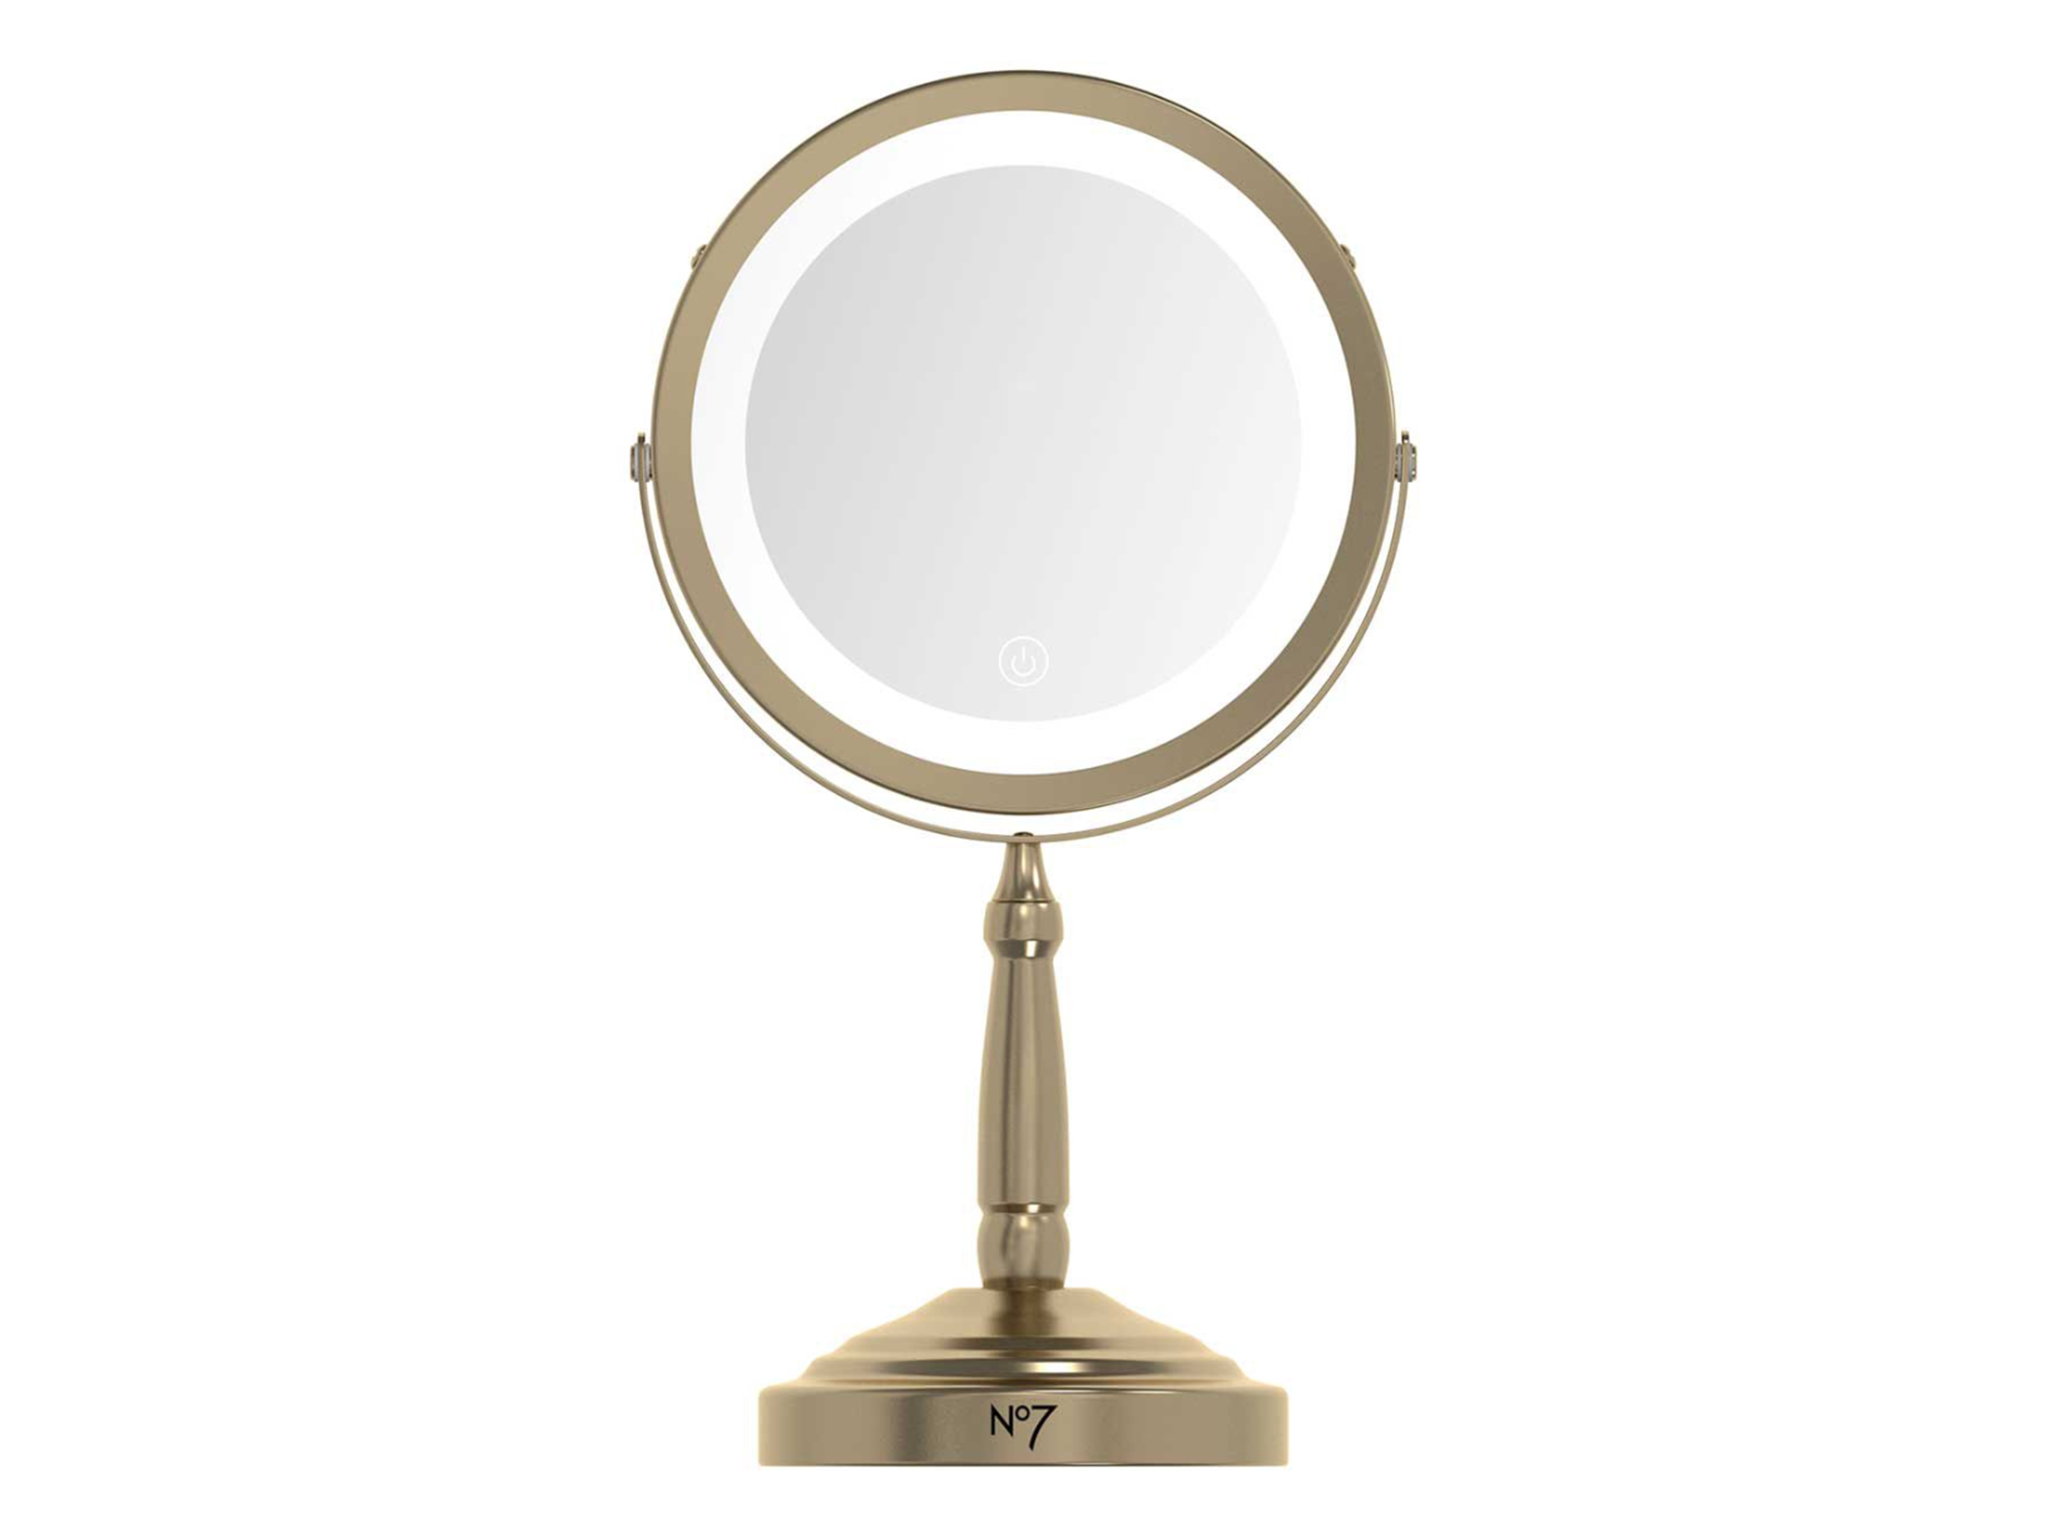 No7 cordless illuminated mirror gold